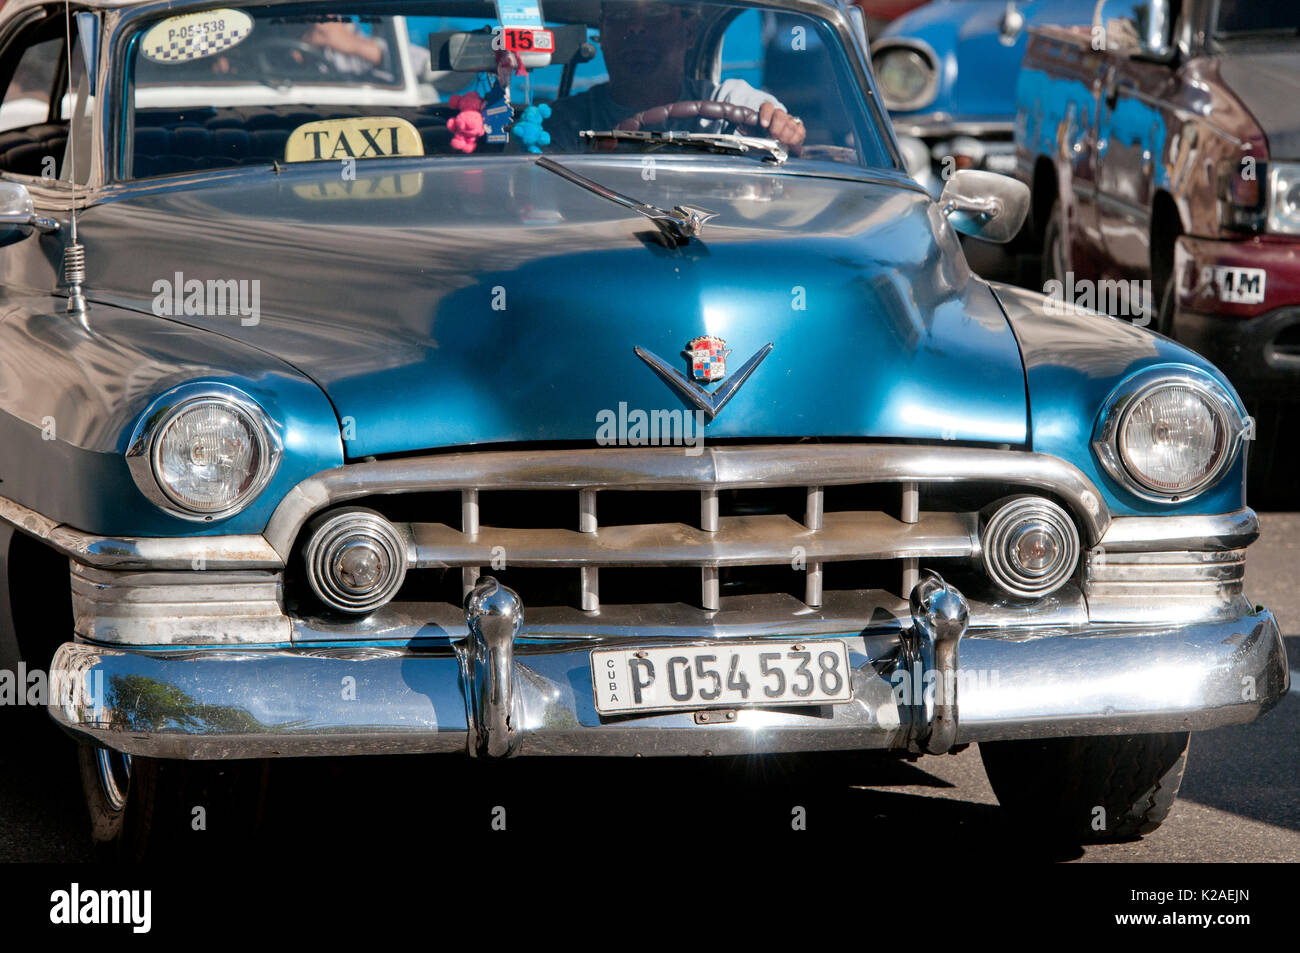 1953 Cadillac taxi in Havana Cuba Stock Photo